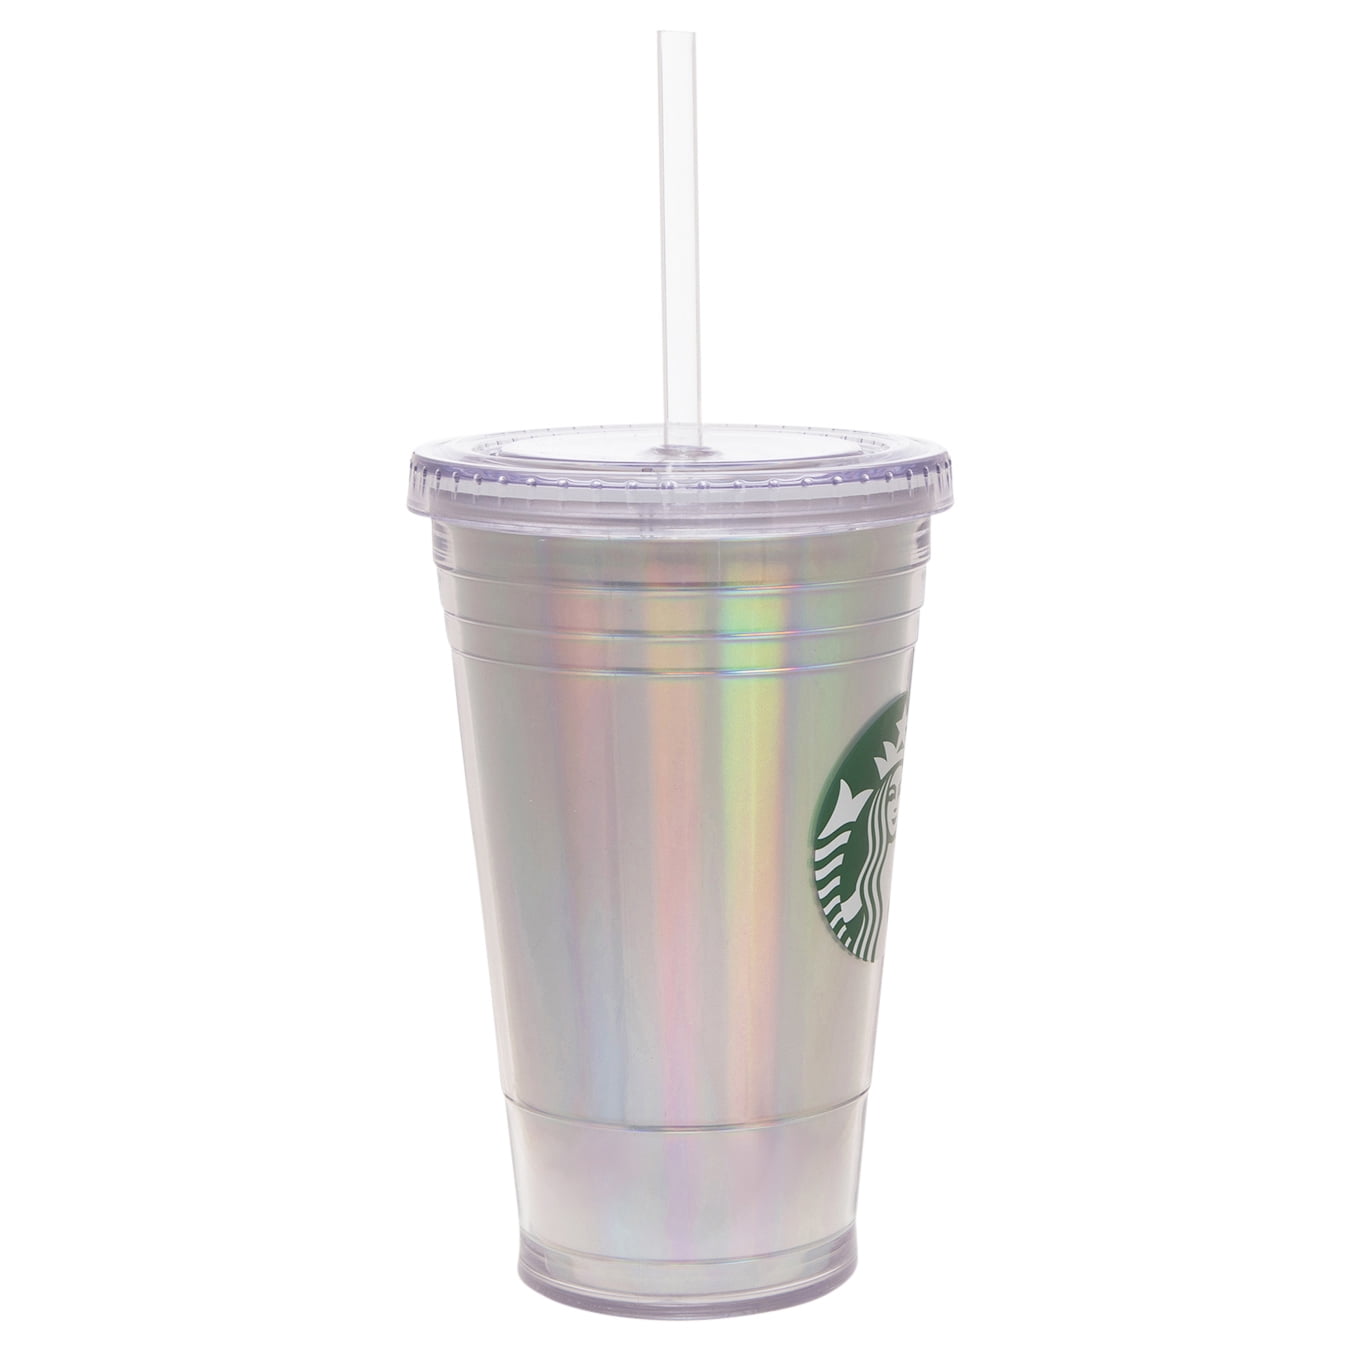 Starbucks Clear Reusable Cup / Plain Starbucks Cup/ Starbucks Blank Cup/  Starbucks Cup/ Starbucks Tumbler/16oz Cup/24oz Cup 